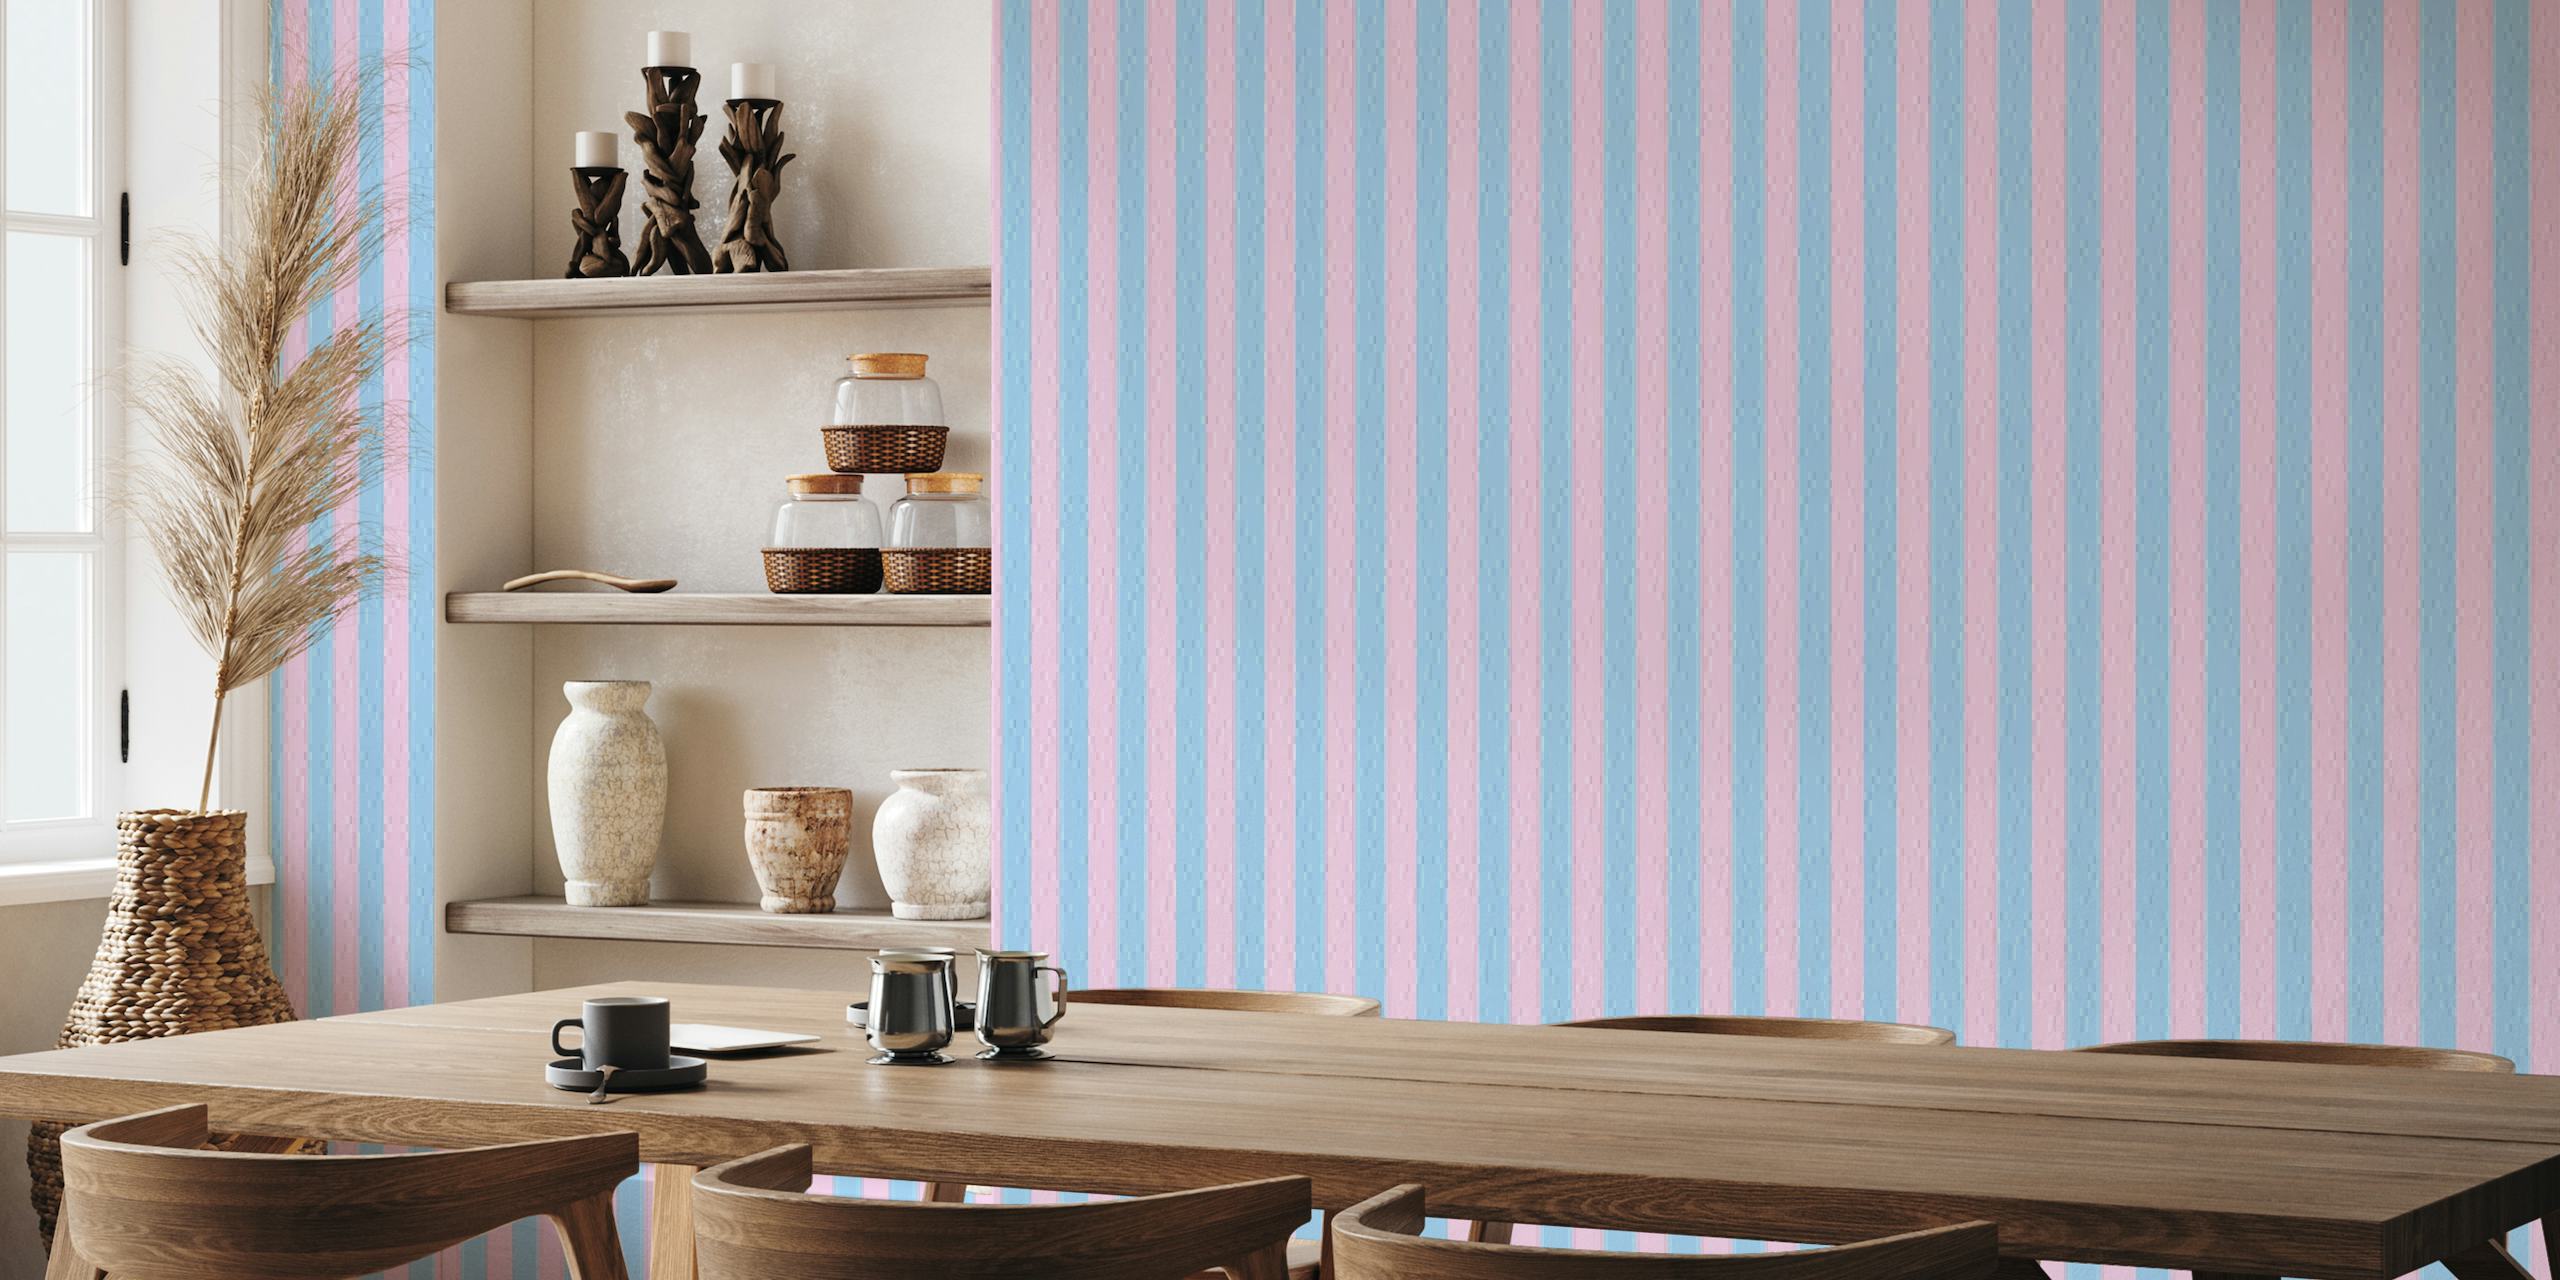 Rosa and blue vertical stripes papel pintado